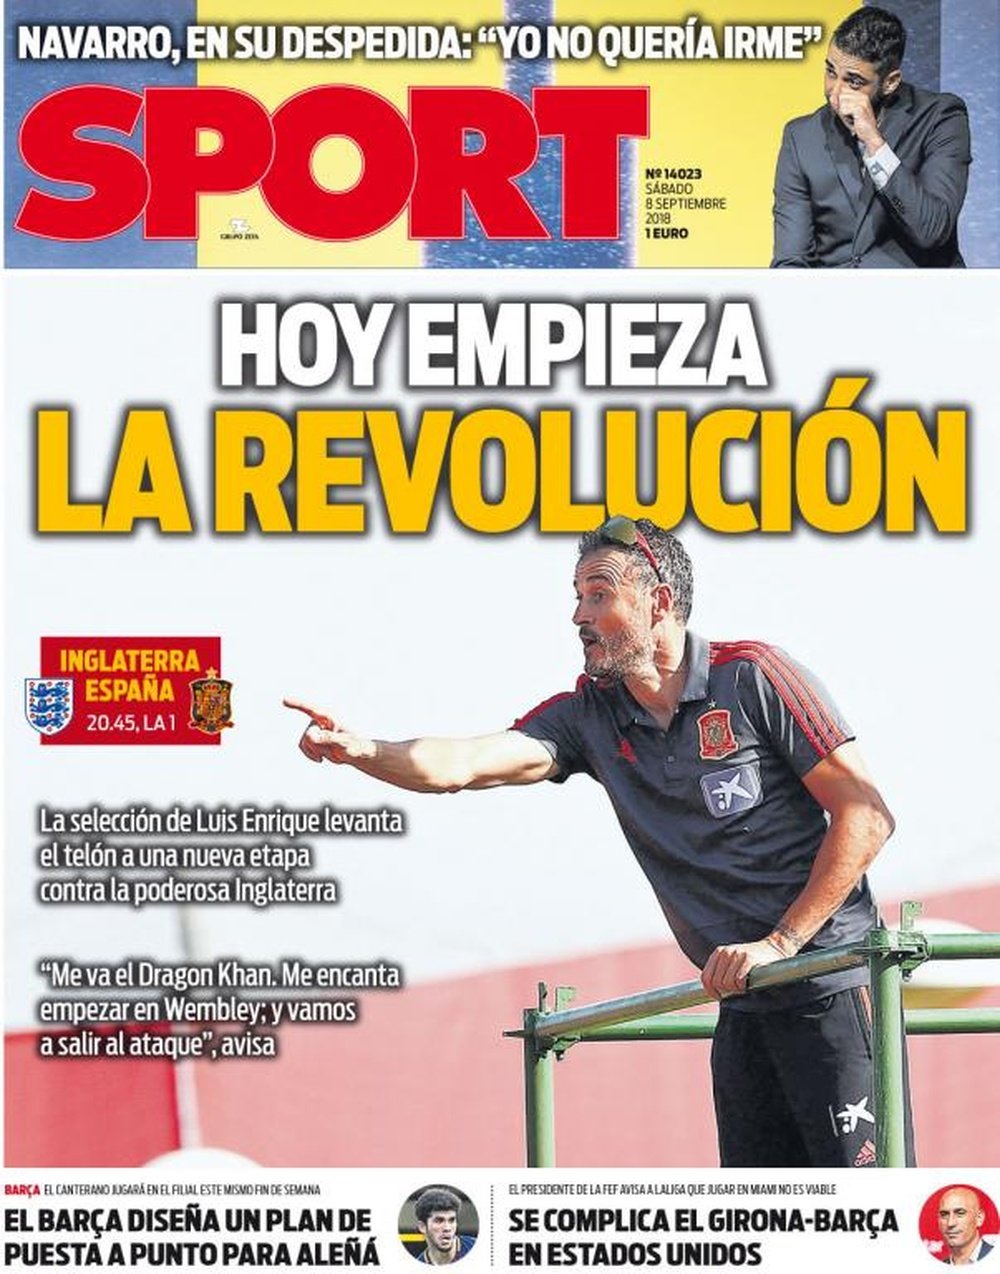 Capa do jornal 'Sport' de 08-09-18. Sport